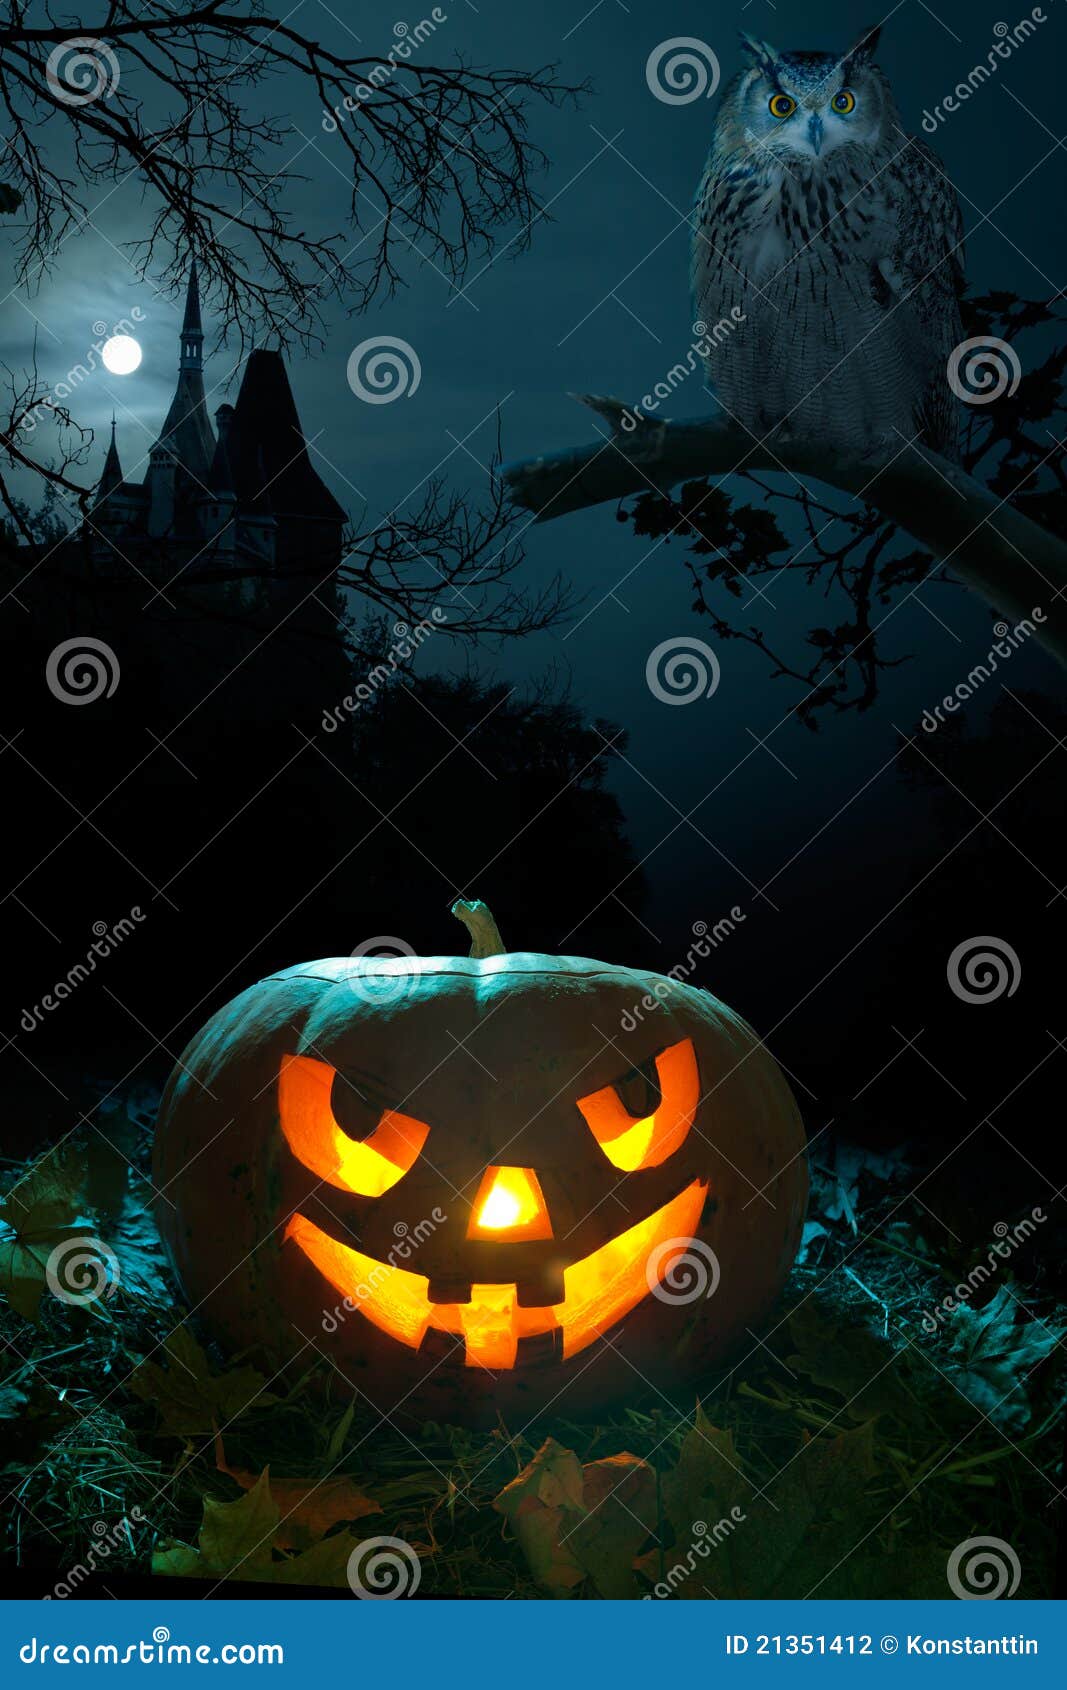 scary pumpkin on halloween nigh